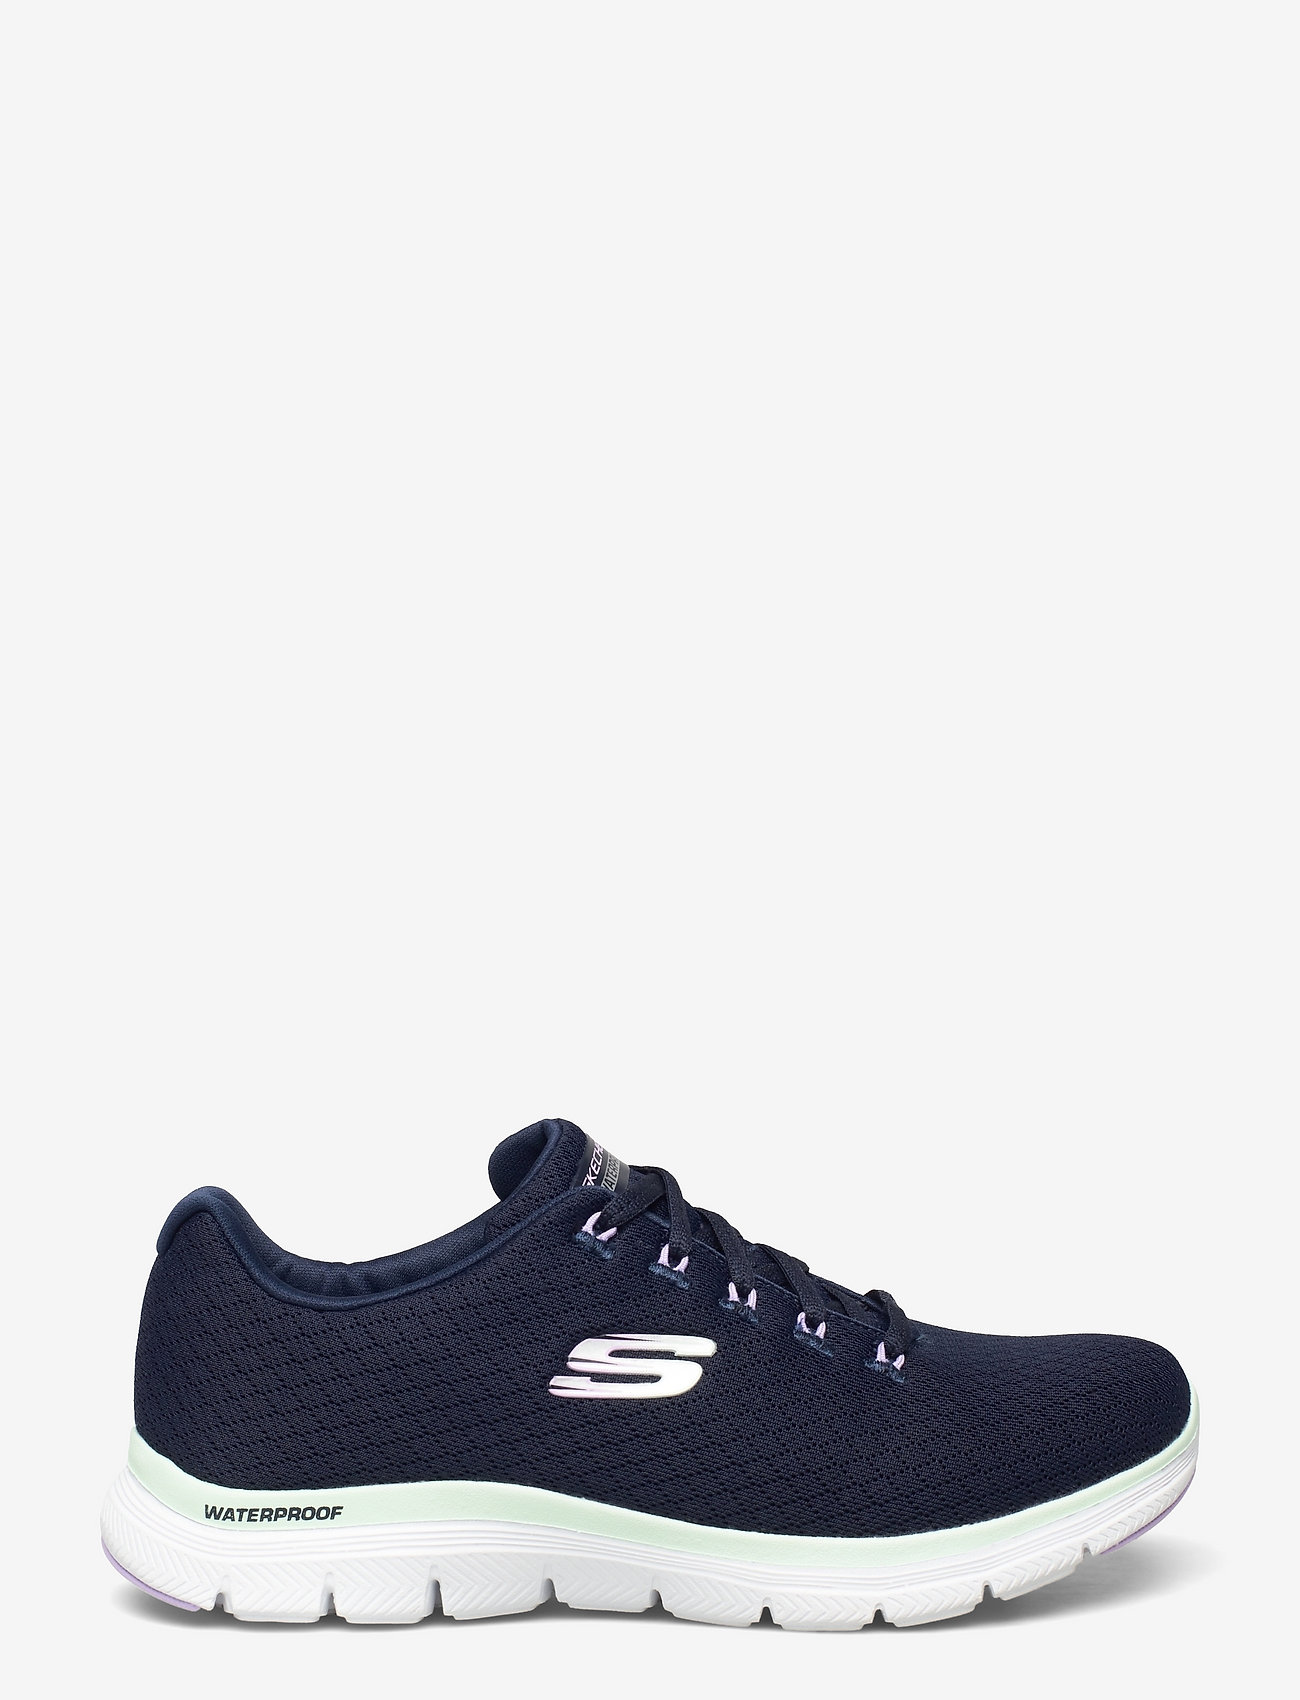 Skechers - Womens Flex Appeal 4.0 - Waterproof - lage sneakers - nvaq navy aqua - 1